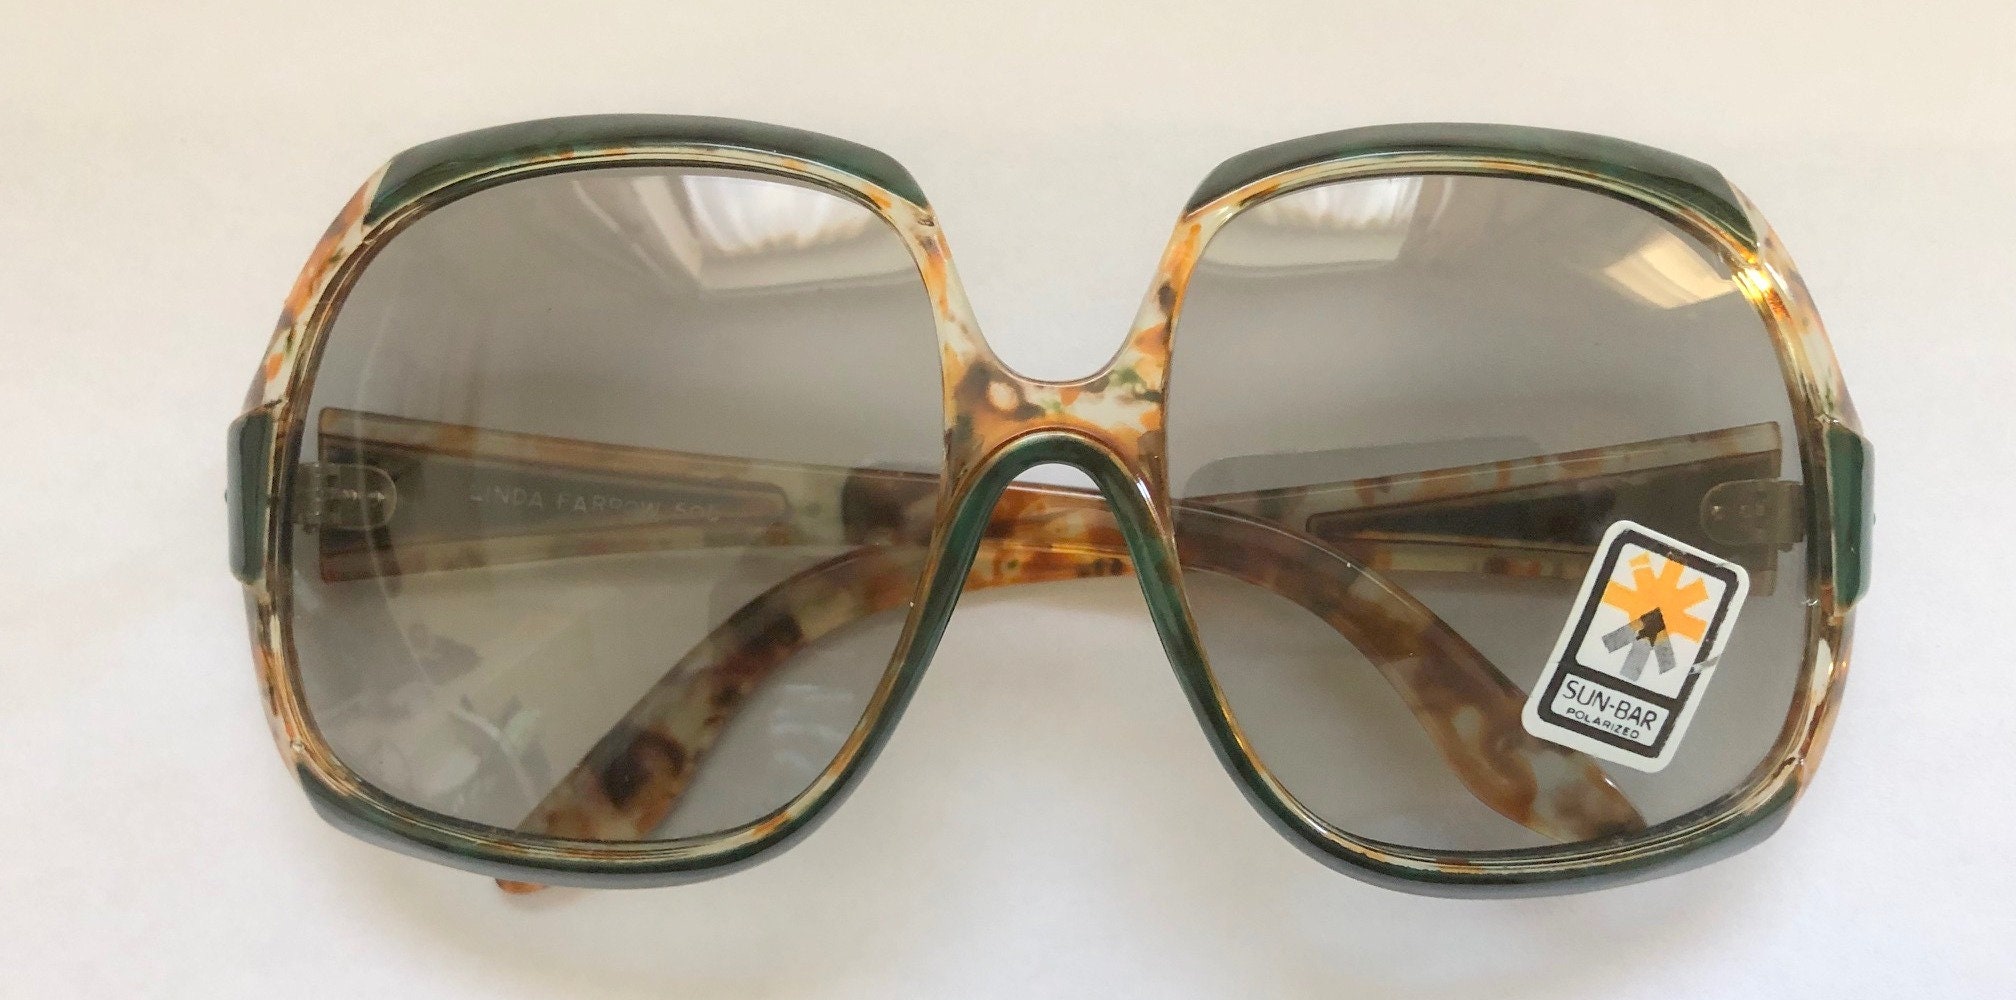 Bardot Oversized Sunglasses in White by LINDA FARROW – LINDA FARROW (INT'L)